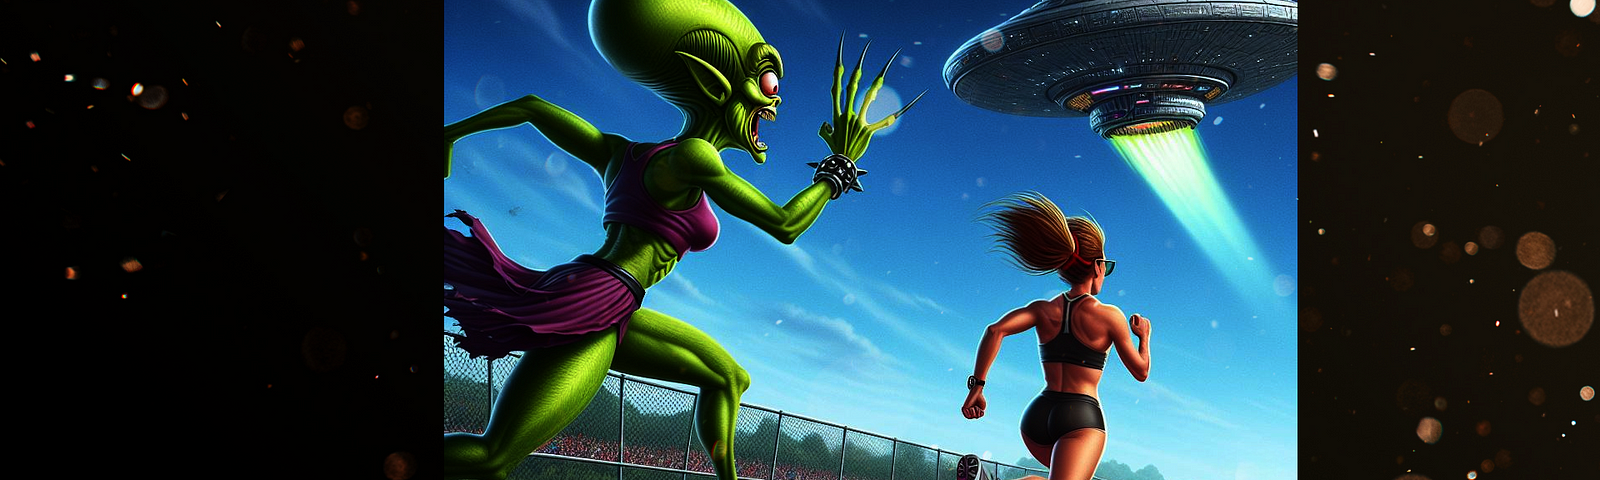 Cartoon female alien chasing a woman in a track race. Spaceship overhead.